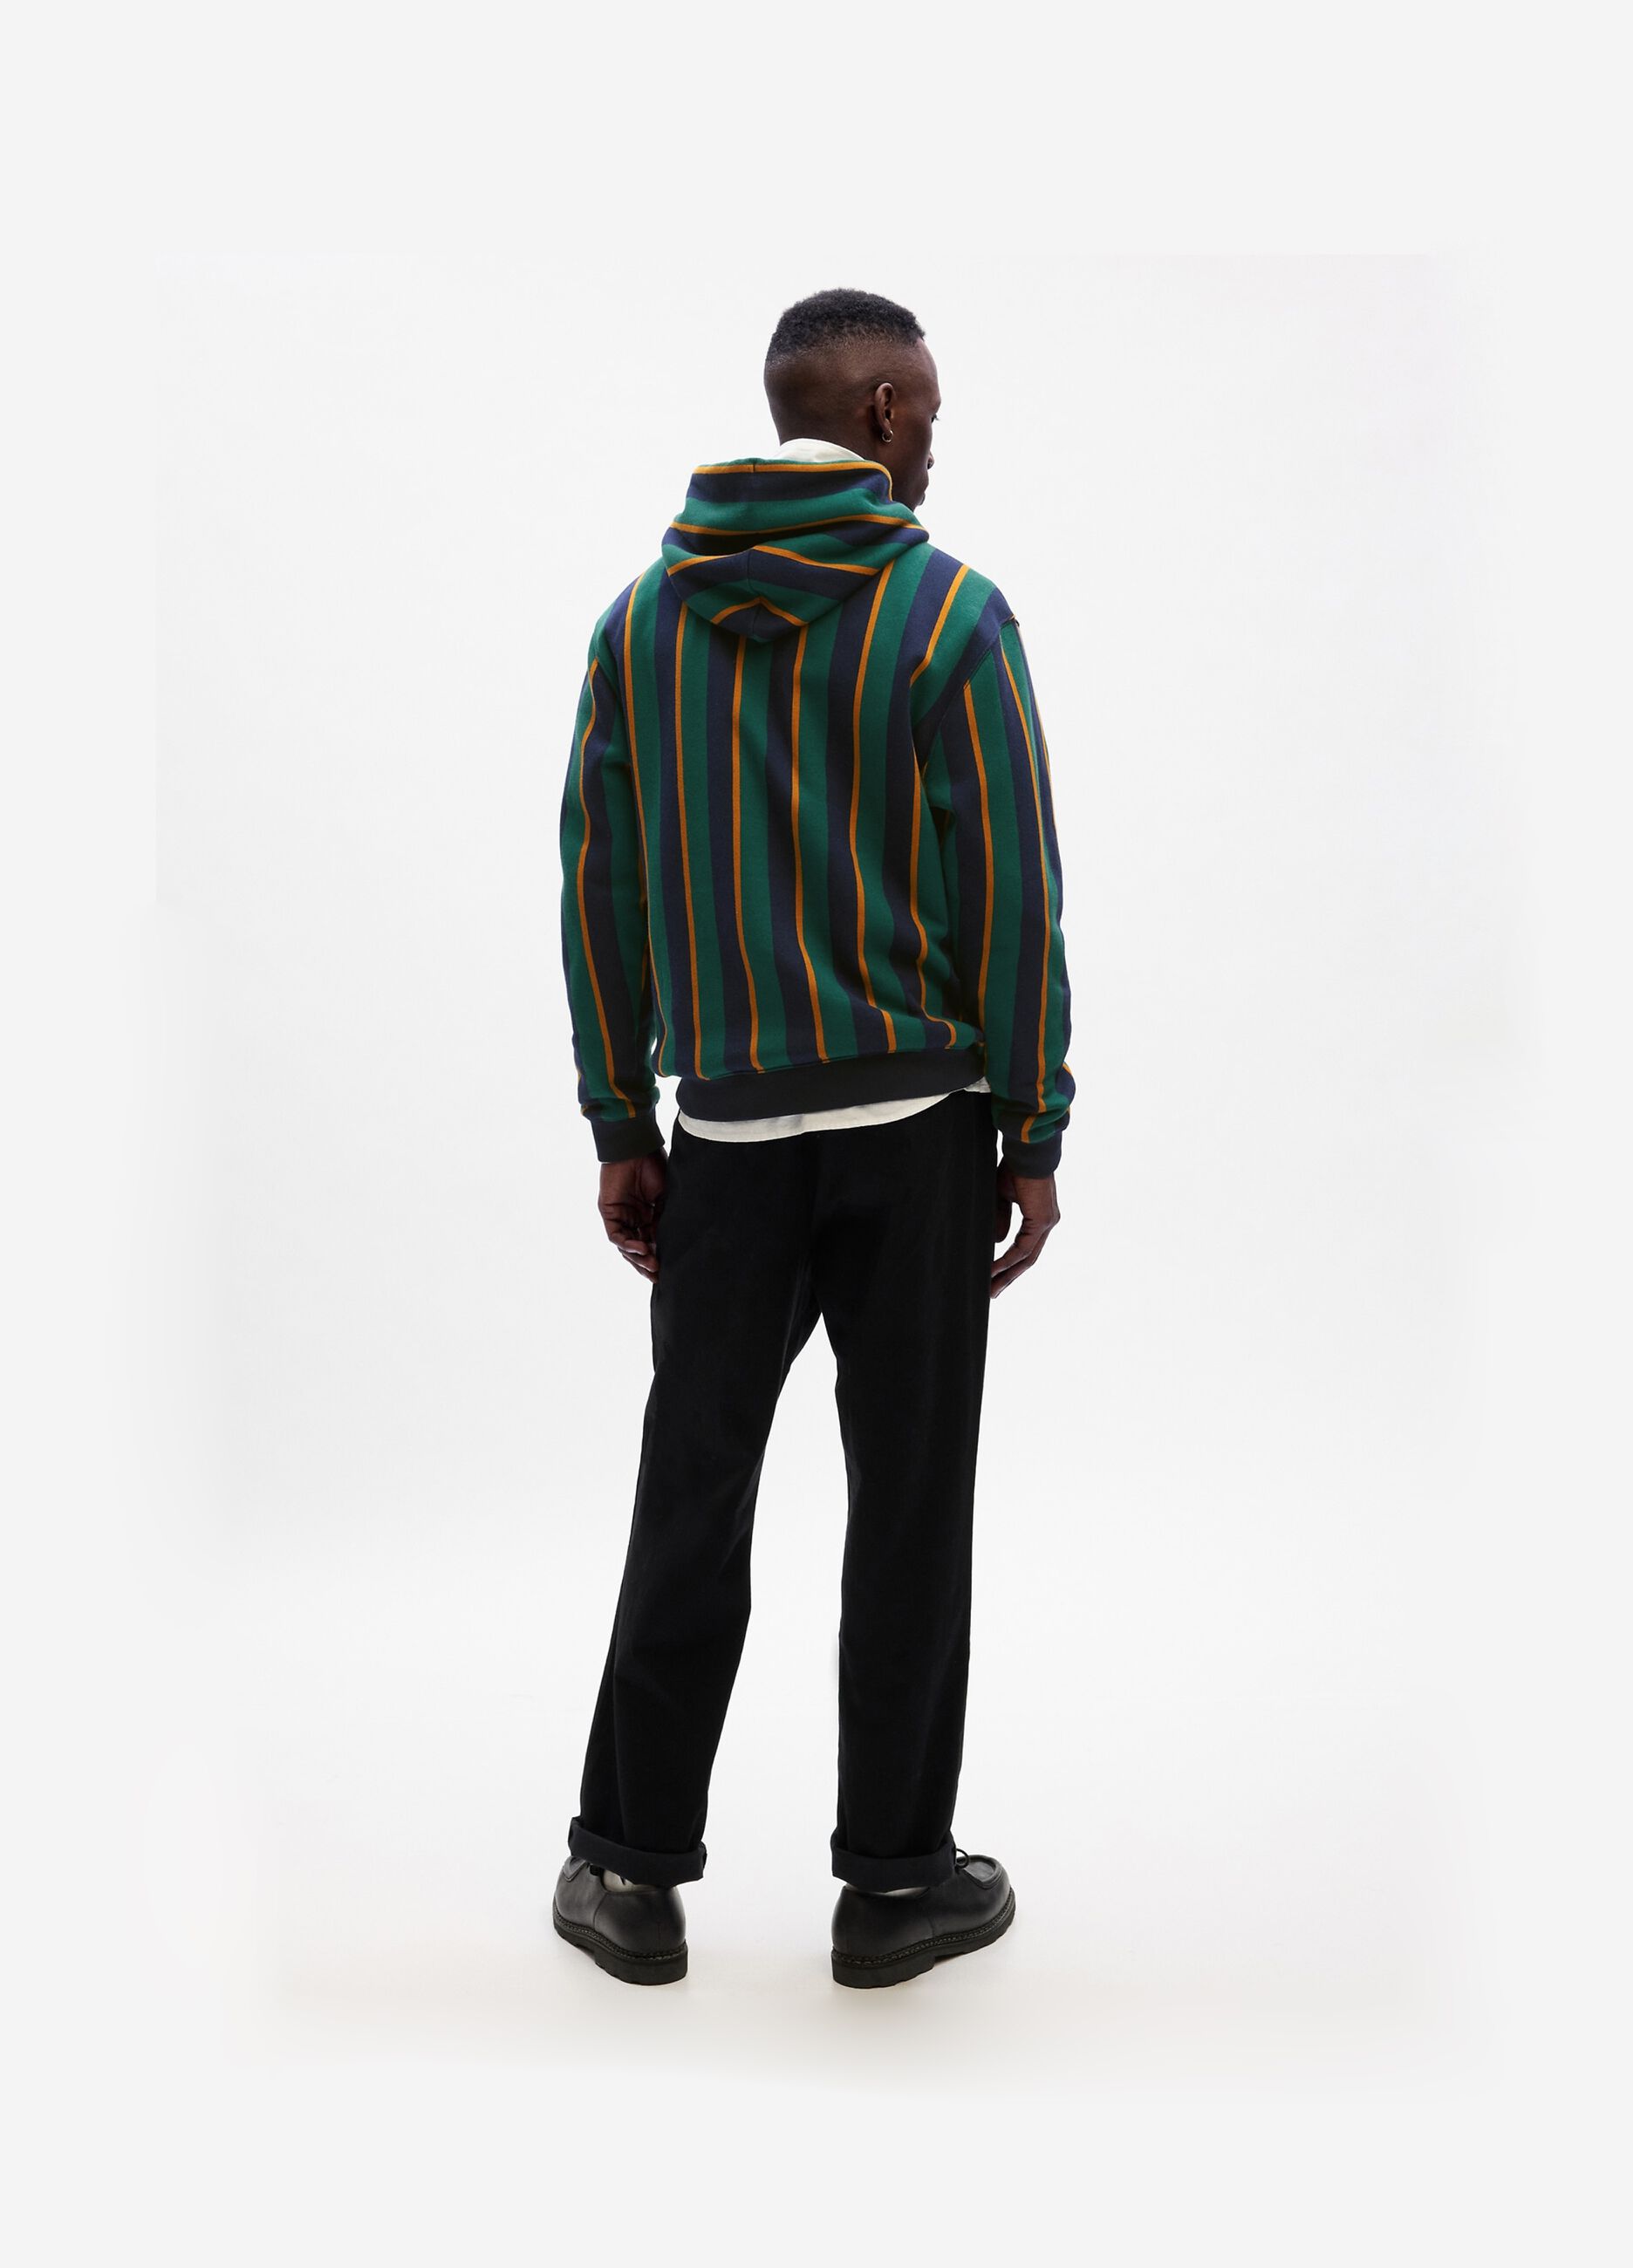 Striped sweatshirt with Dapper Dan of Harlem embroidery